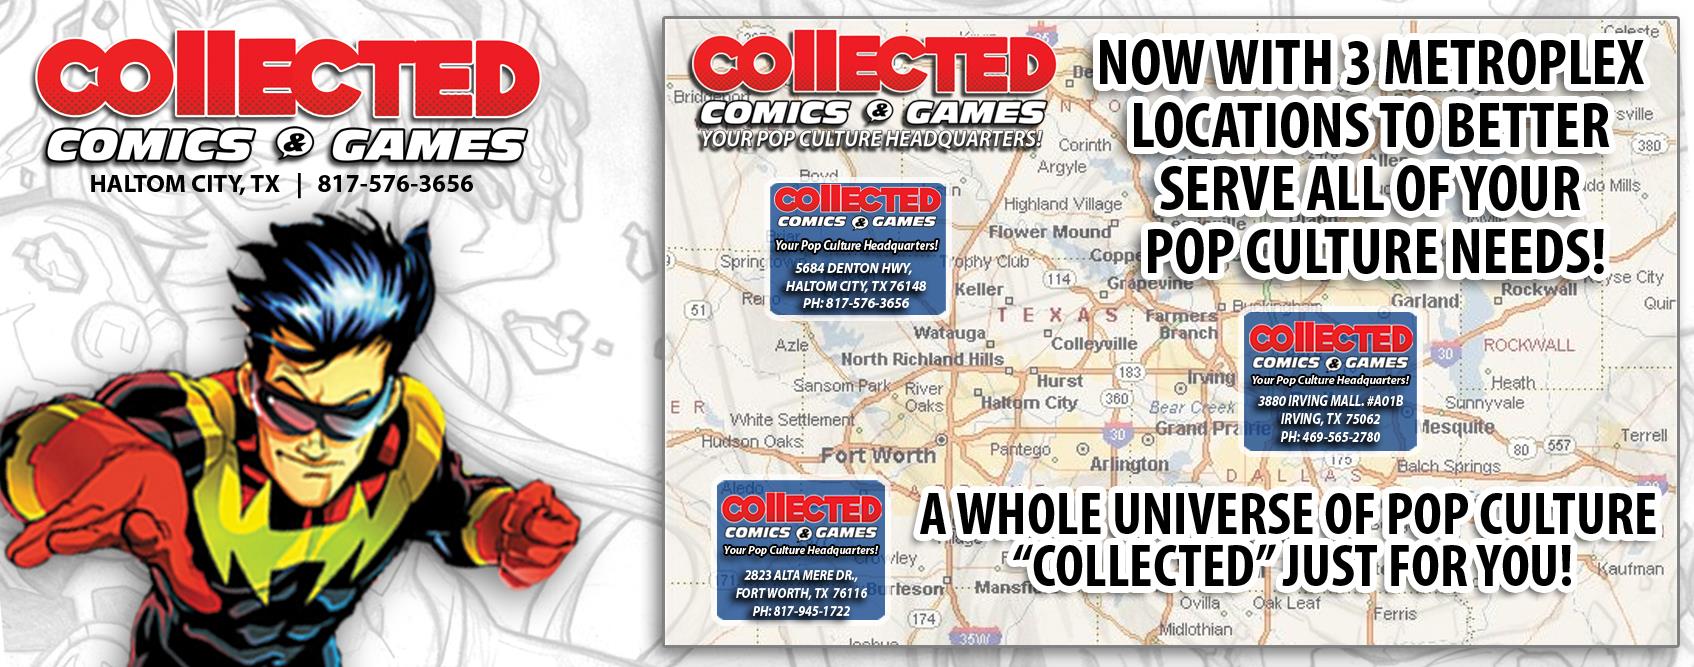 Collected Comics & Games: Haltom City Banner